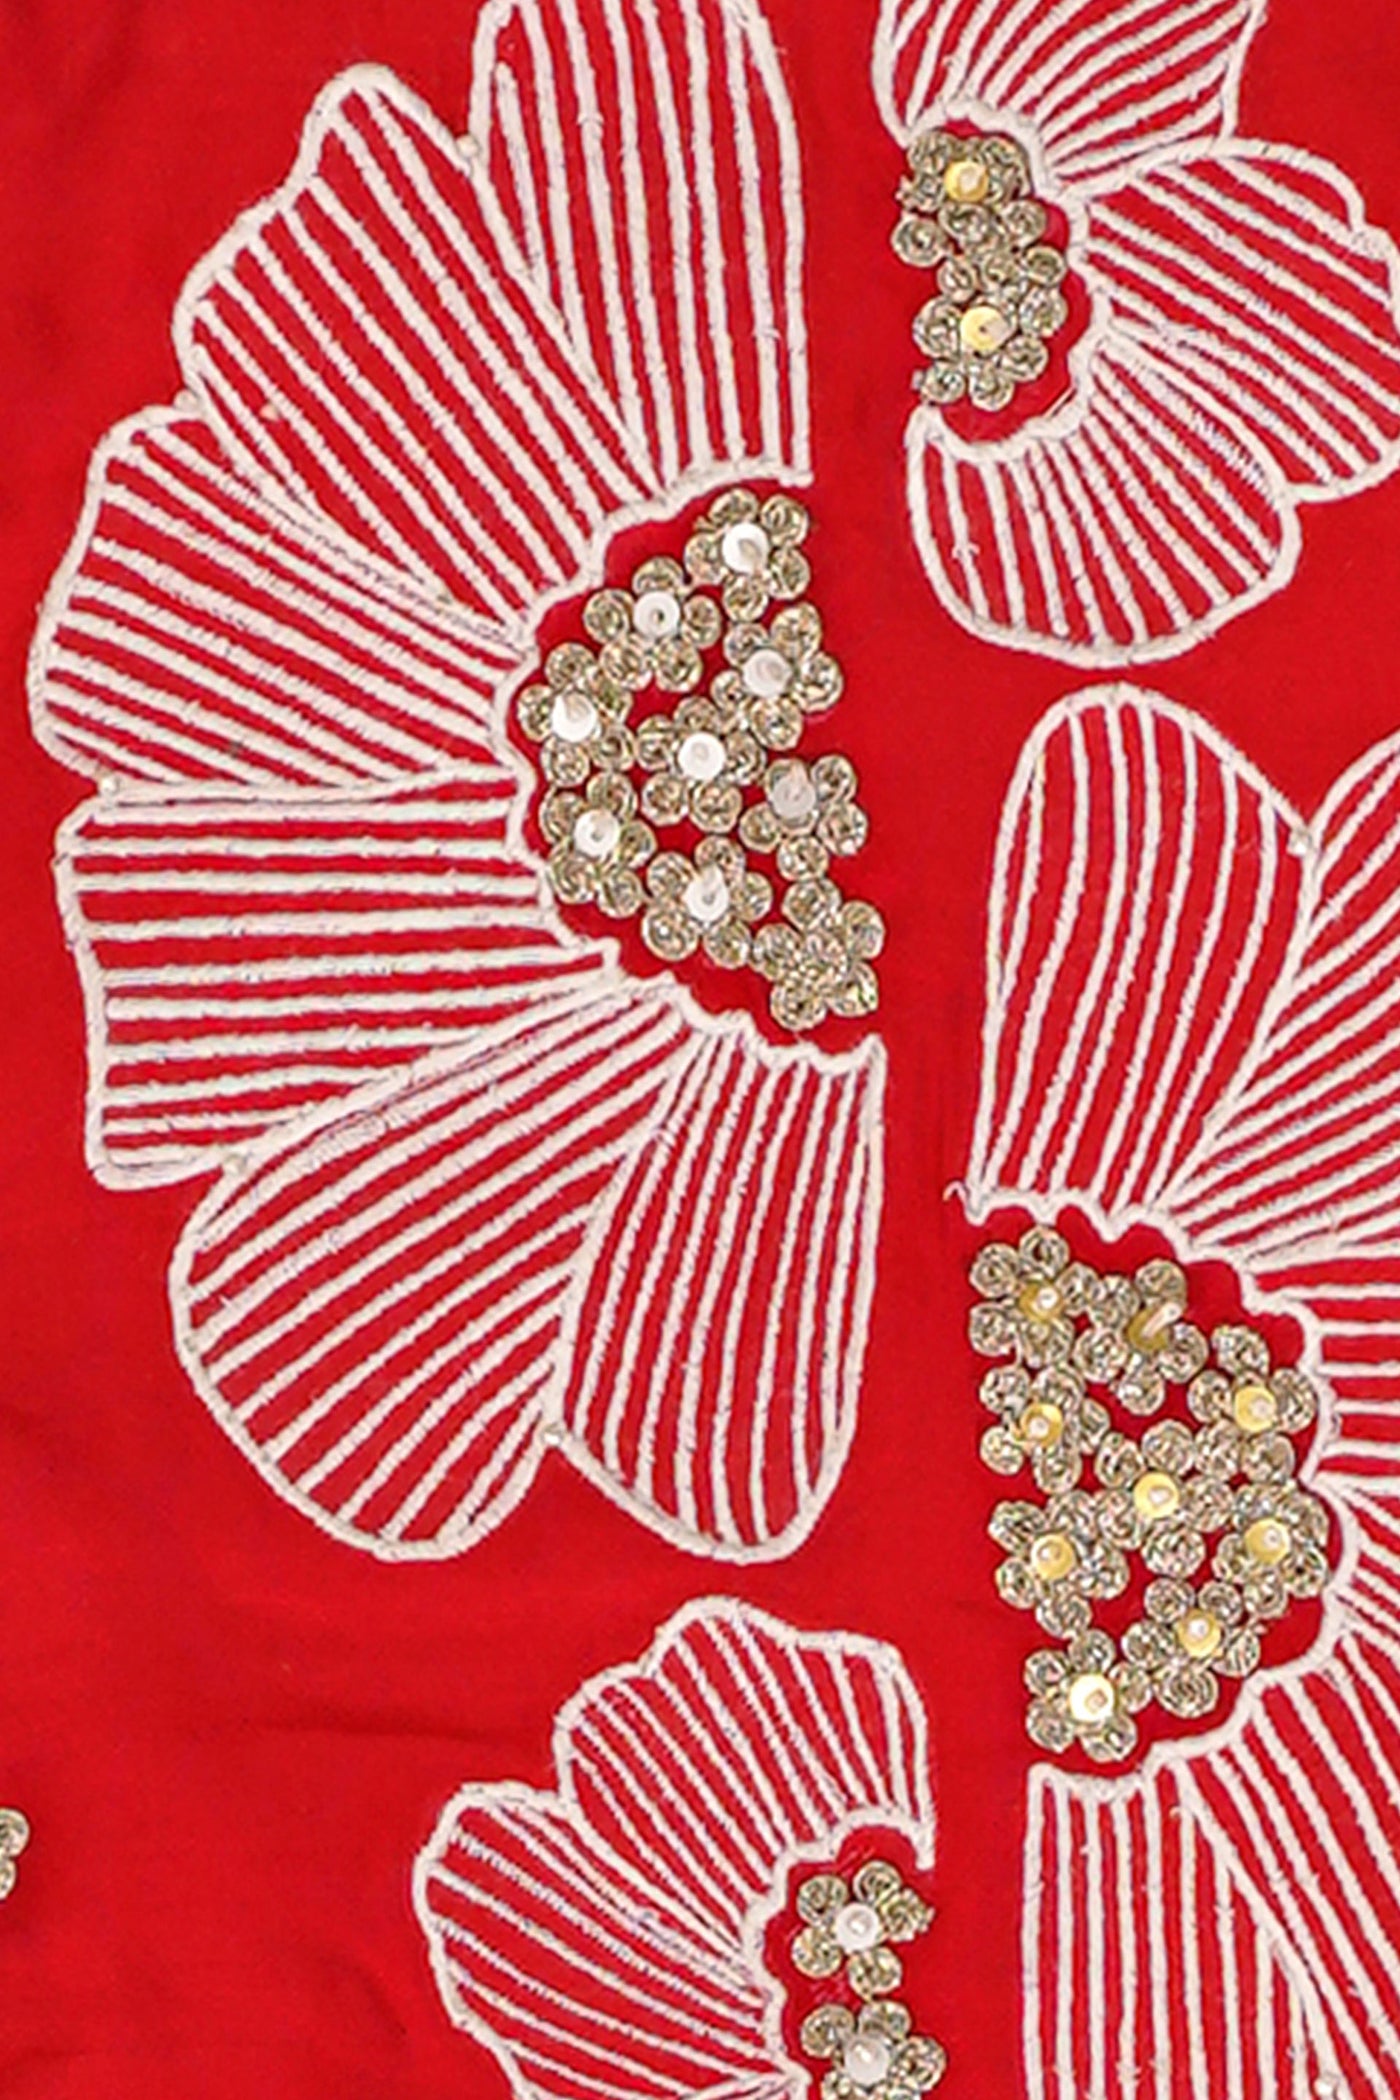 Mi ducle an'ya Red Floral Halter Lehenga Red festive kidswear girls online shopping melange singapore indian designer wear